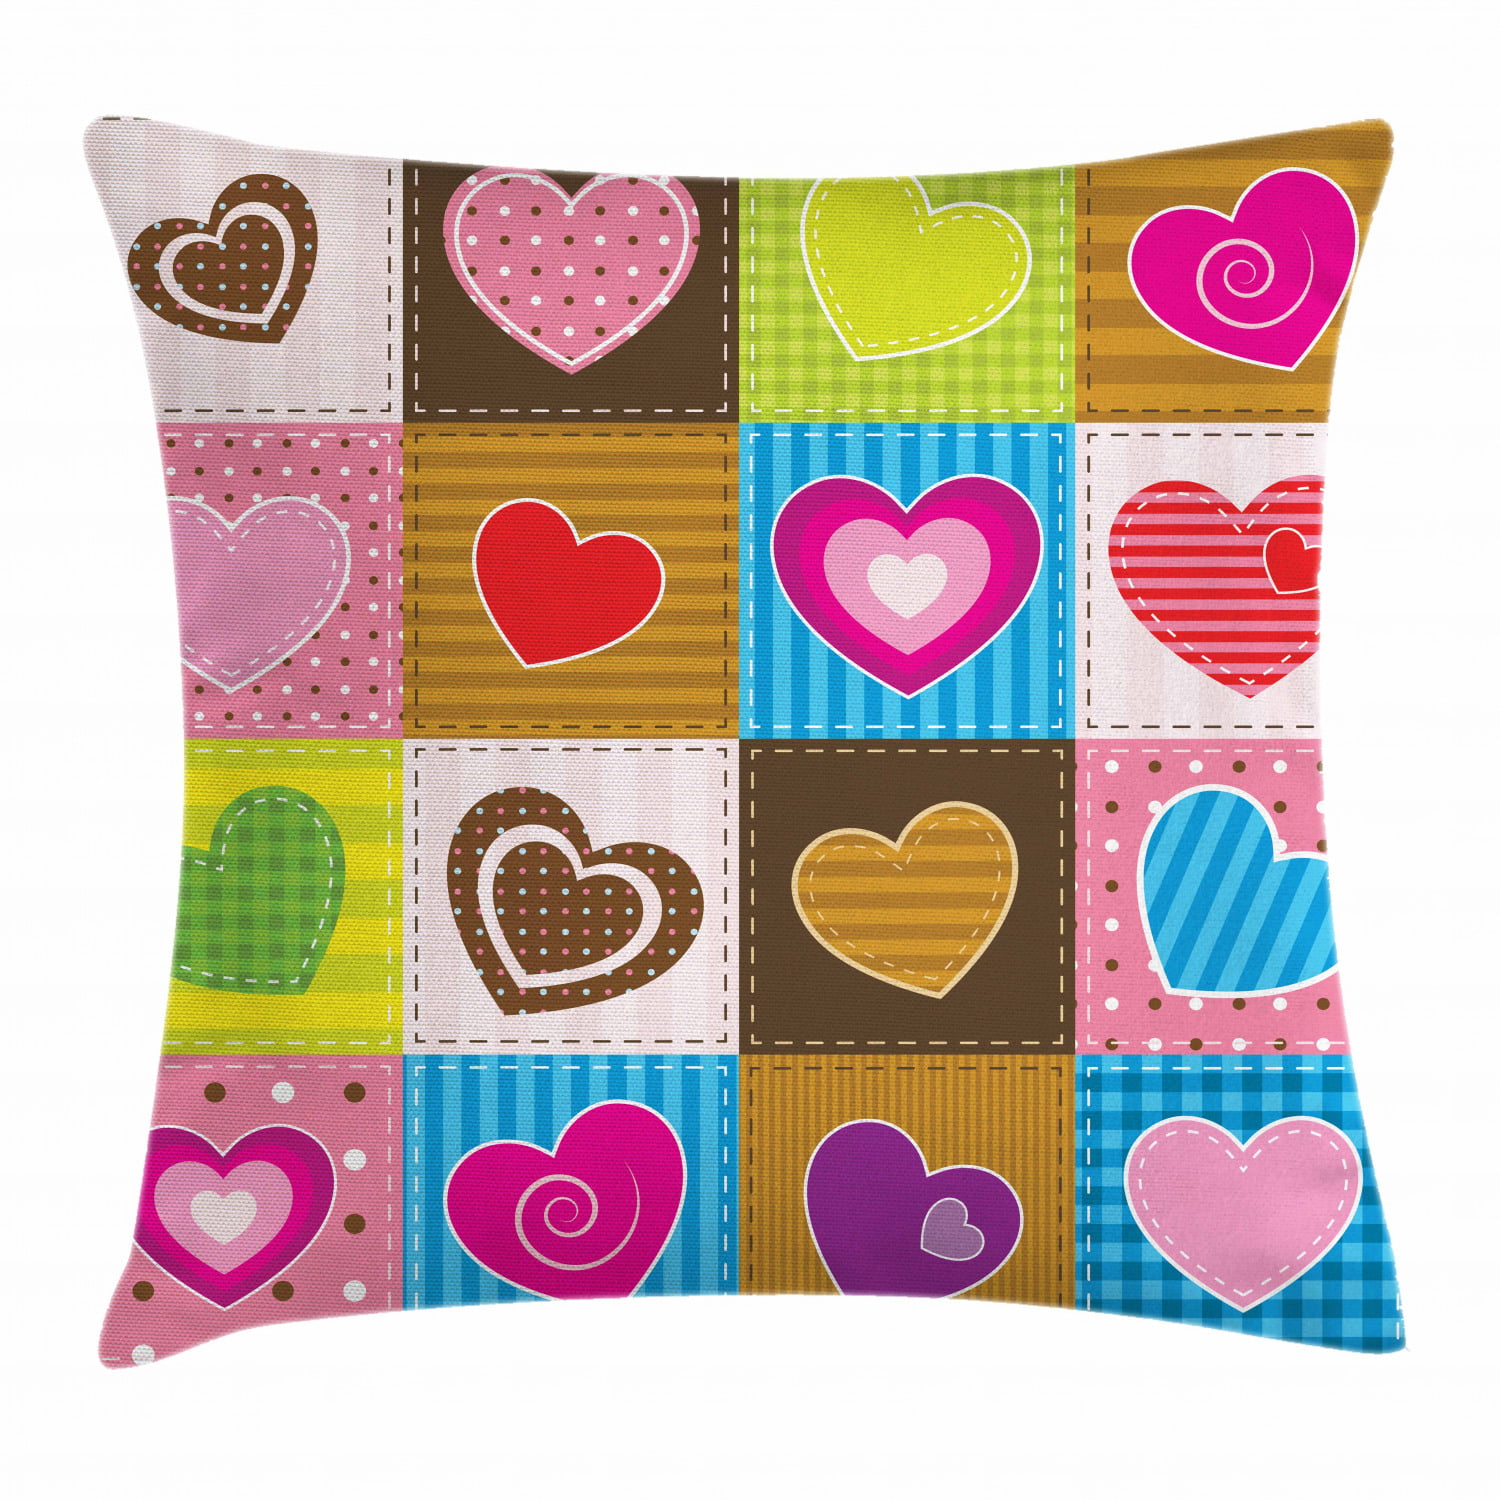 Cute heart shaped decorative pillow